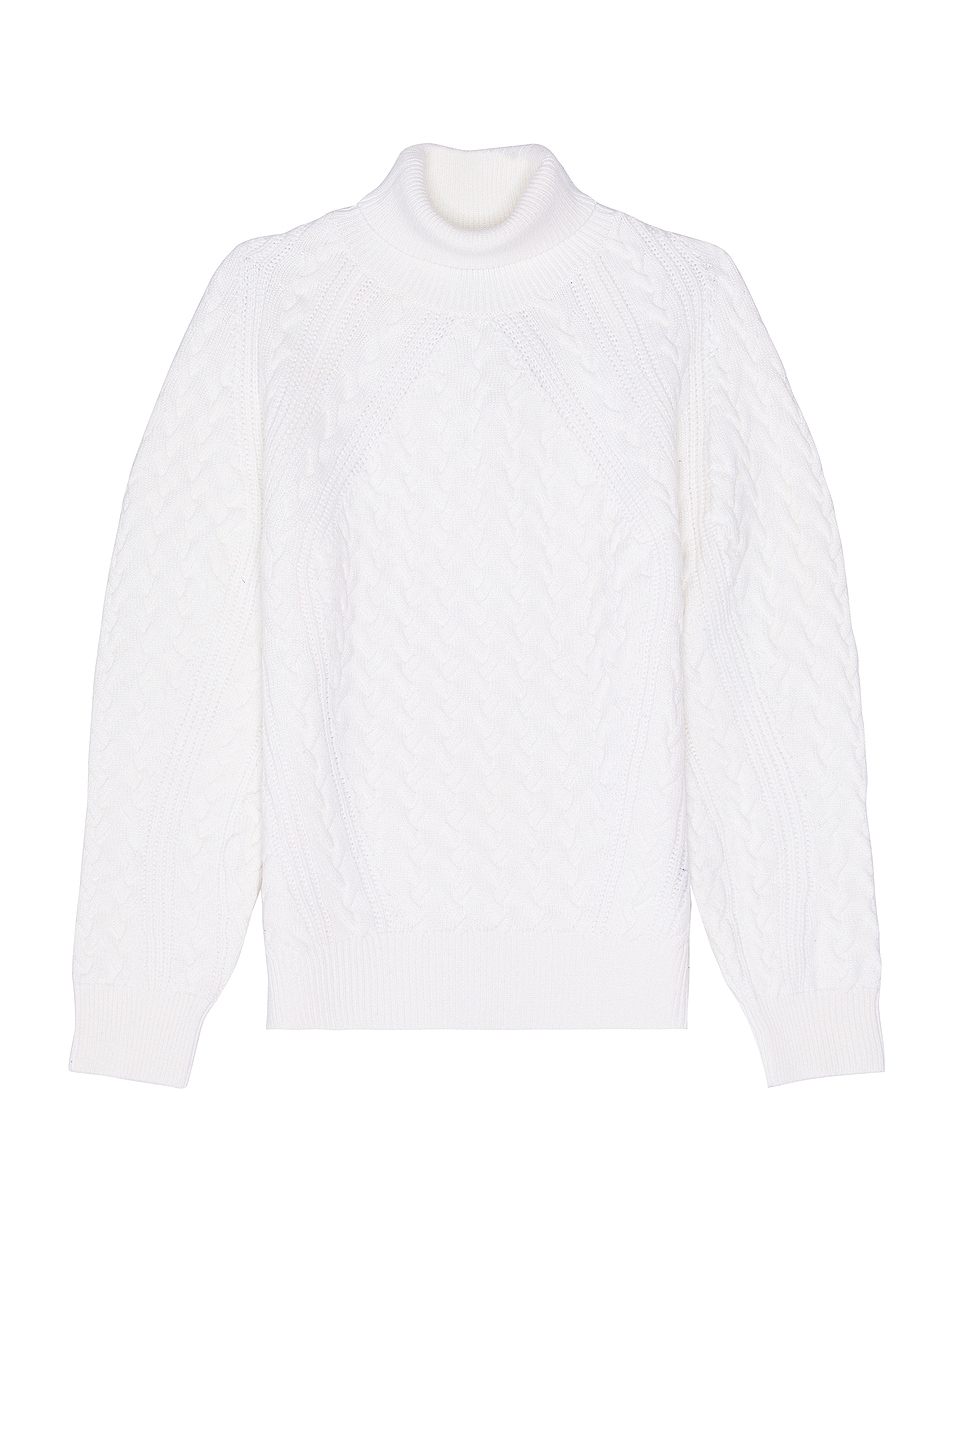 Image 1 of Zegna Techmerino Cable Turtleneck Sweater in White